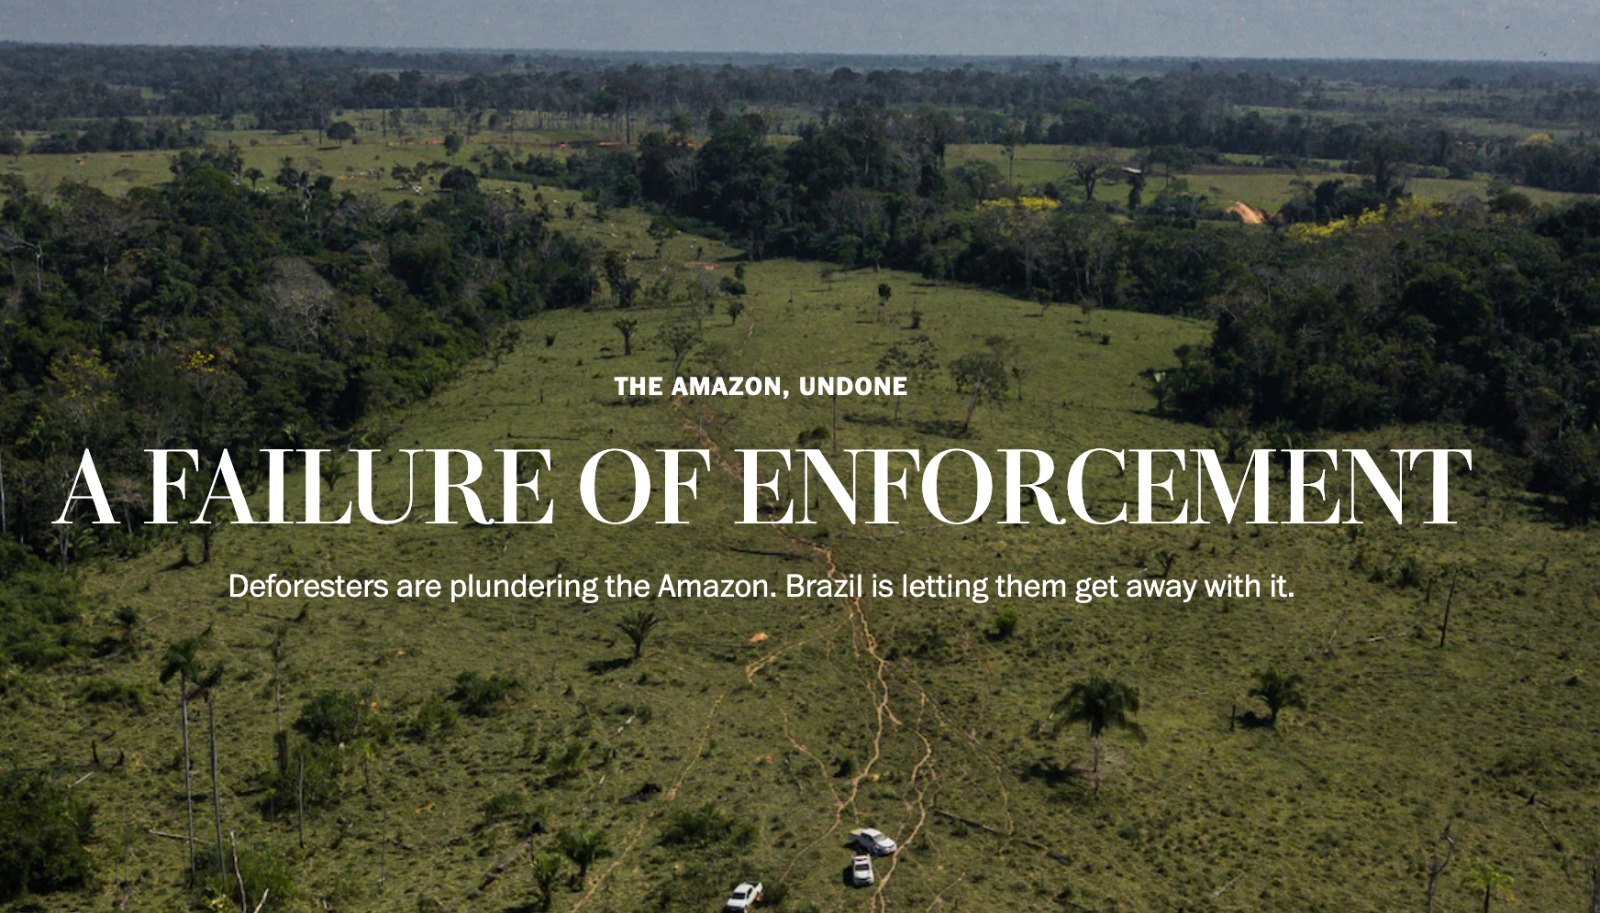 Brazil's environmental agency agents